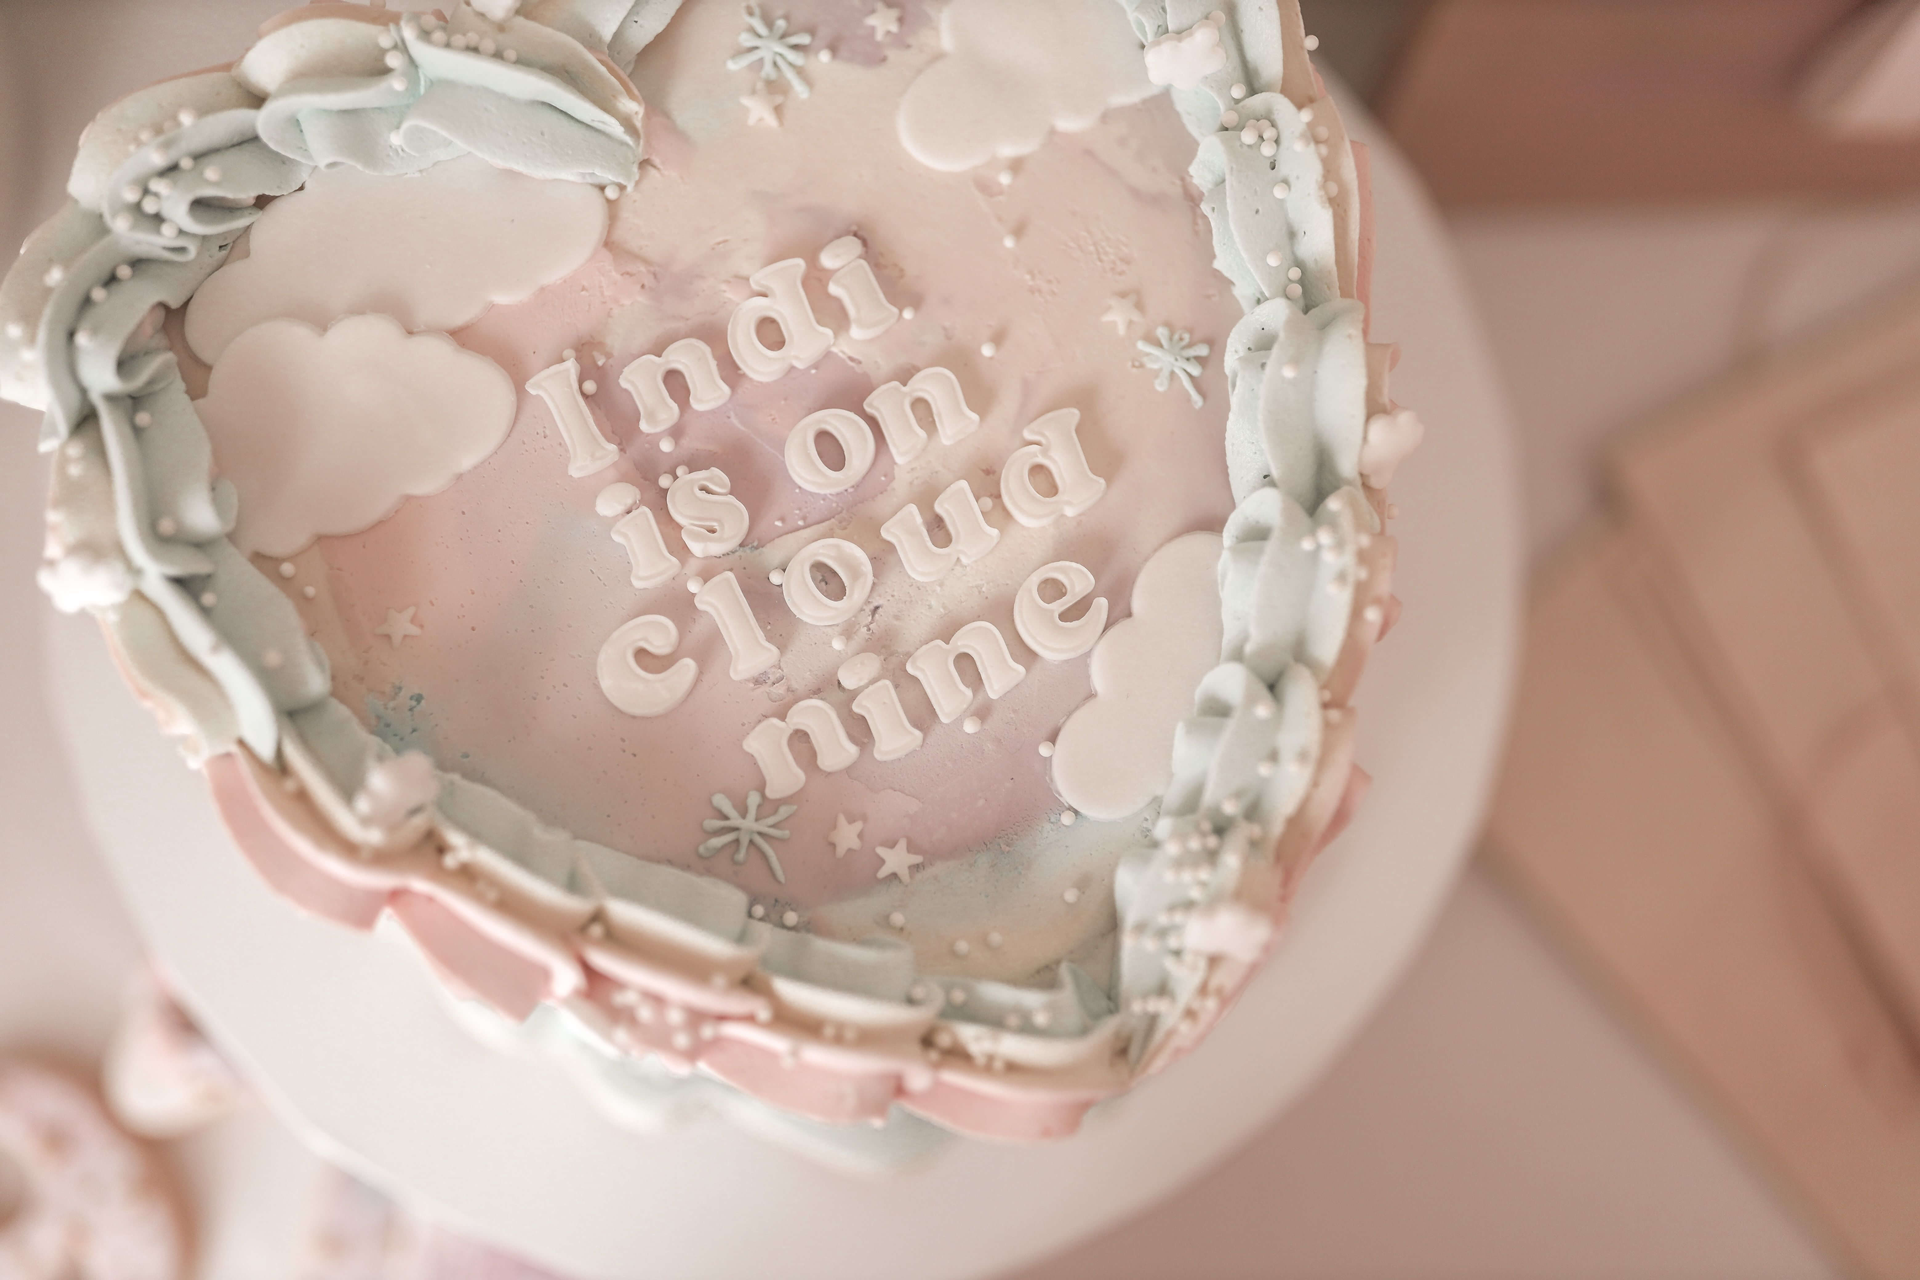 on cloud 9 cake